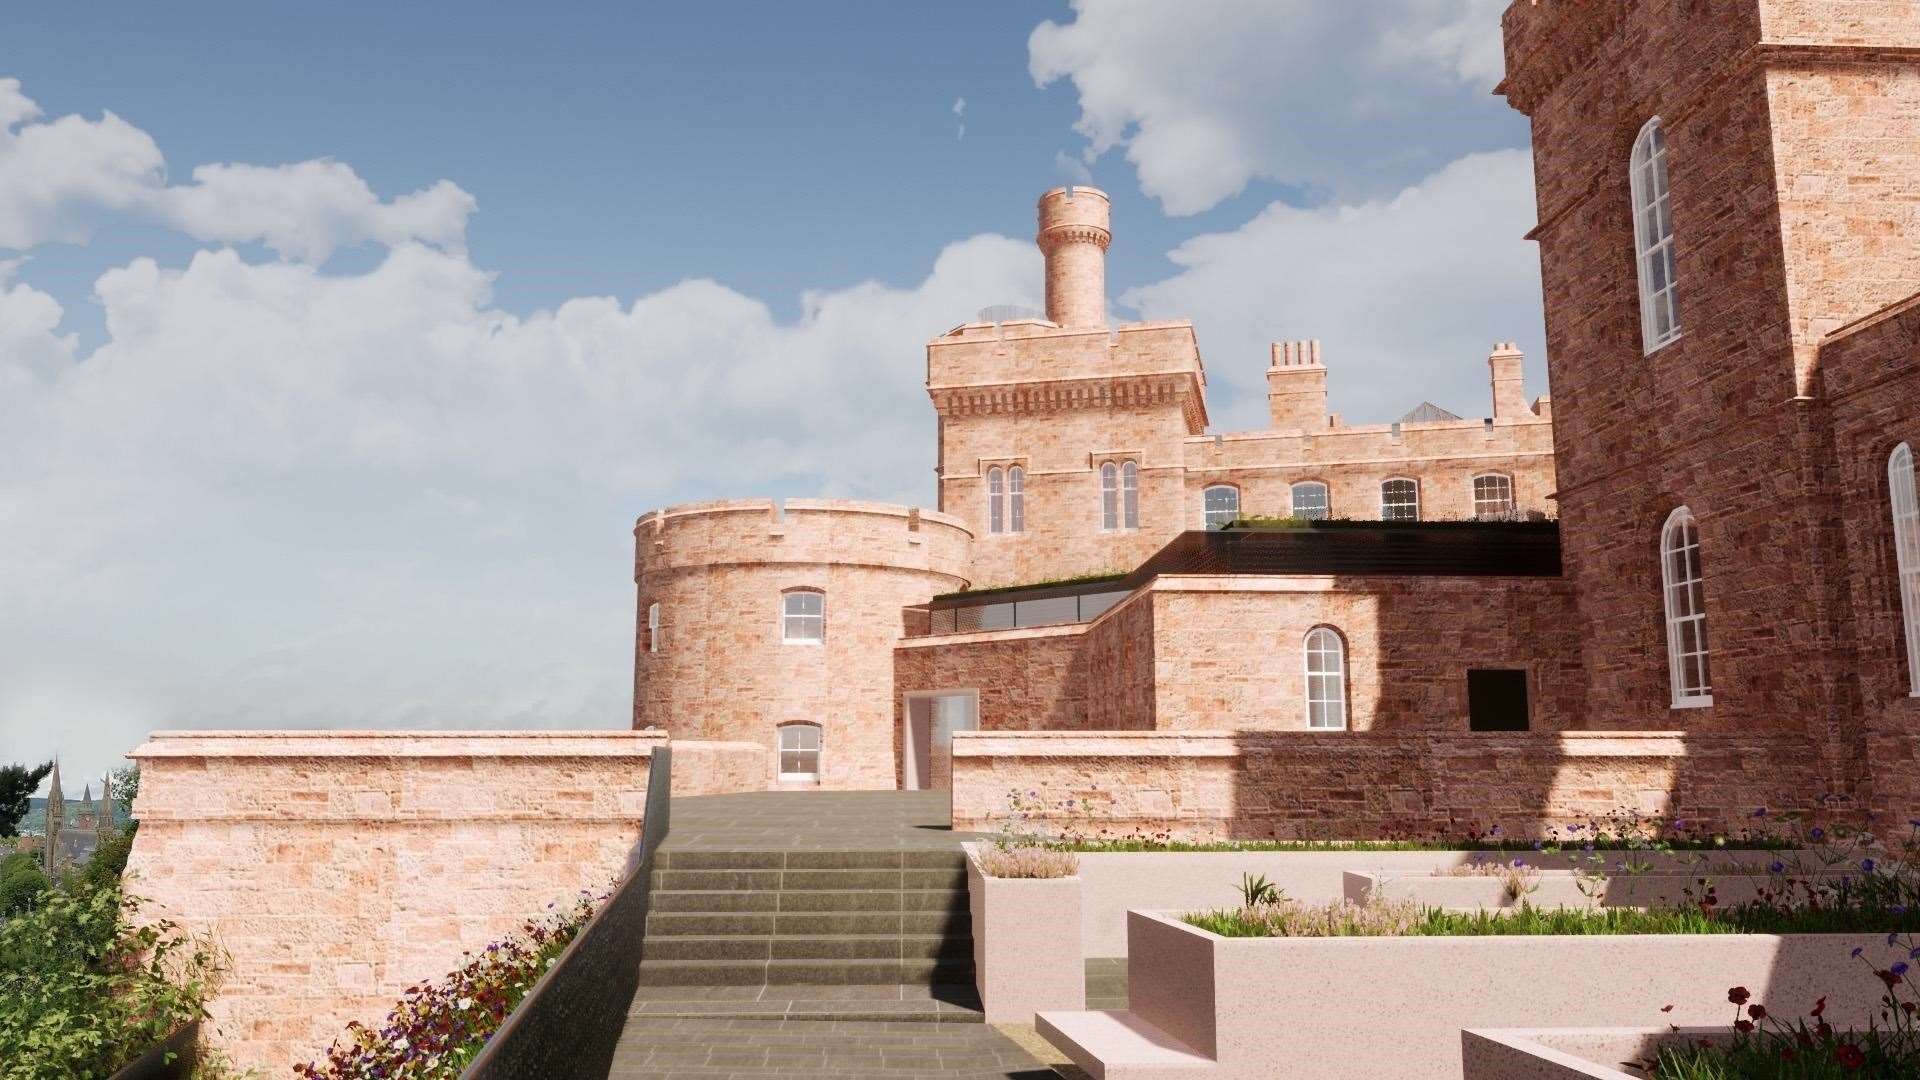 Inverness Castle development rednition.